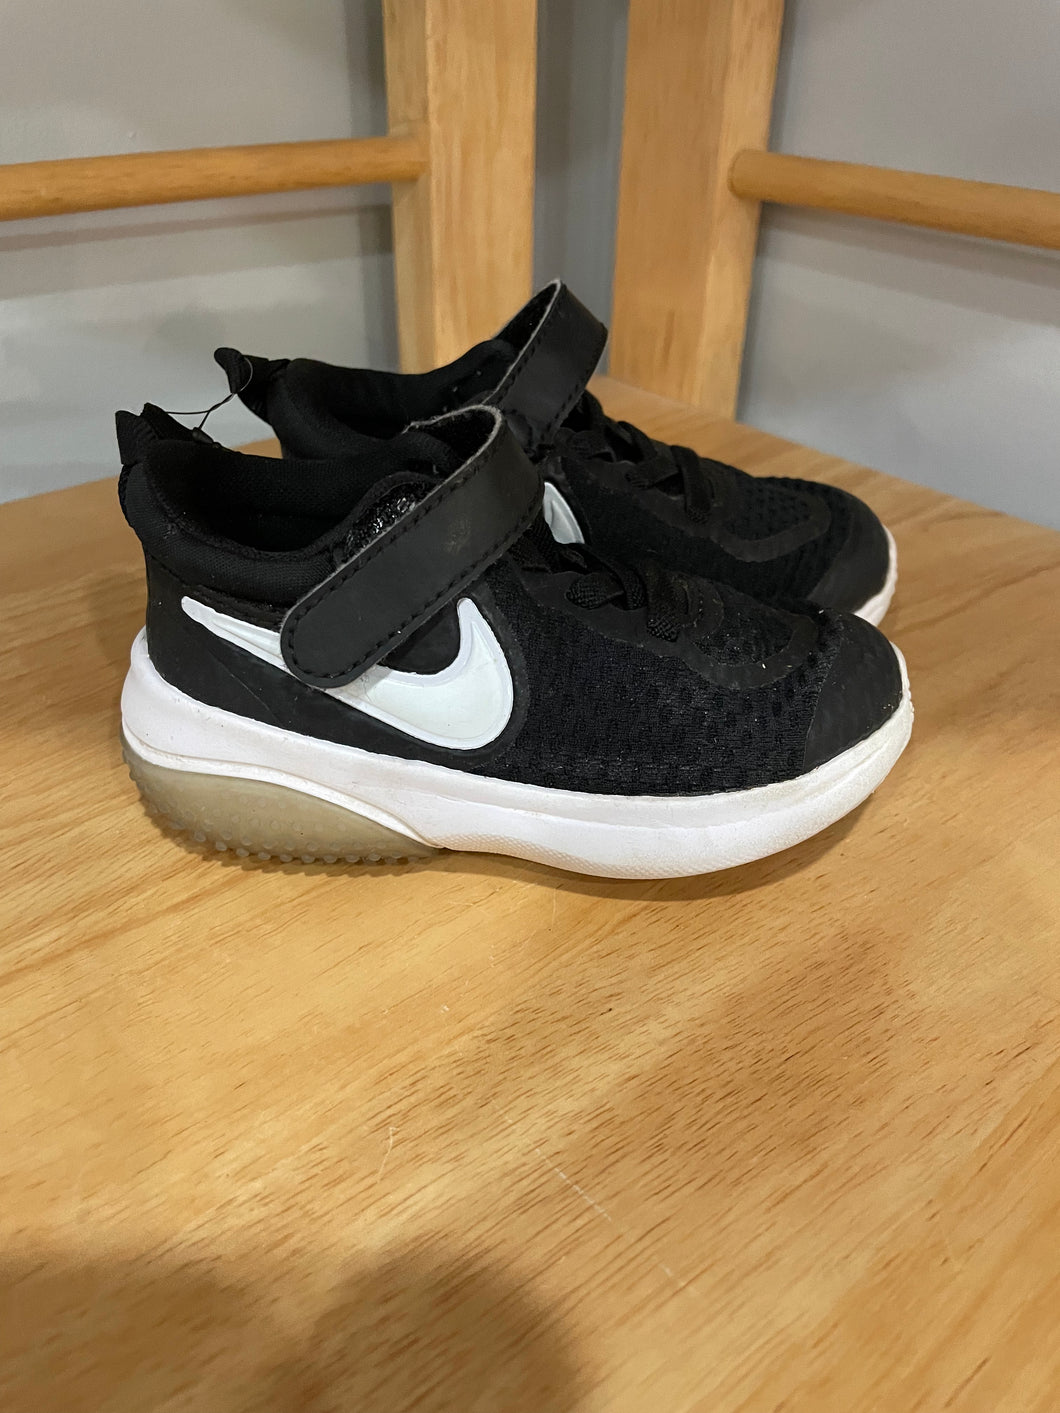 Nike Black Tennis Shoes Size 6C